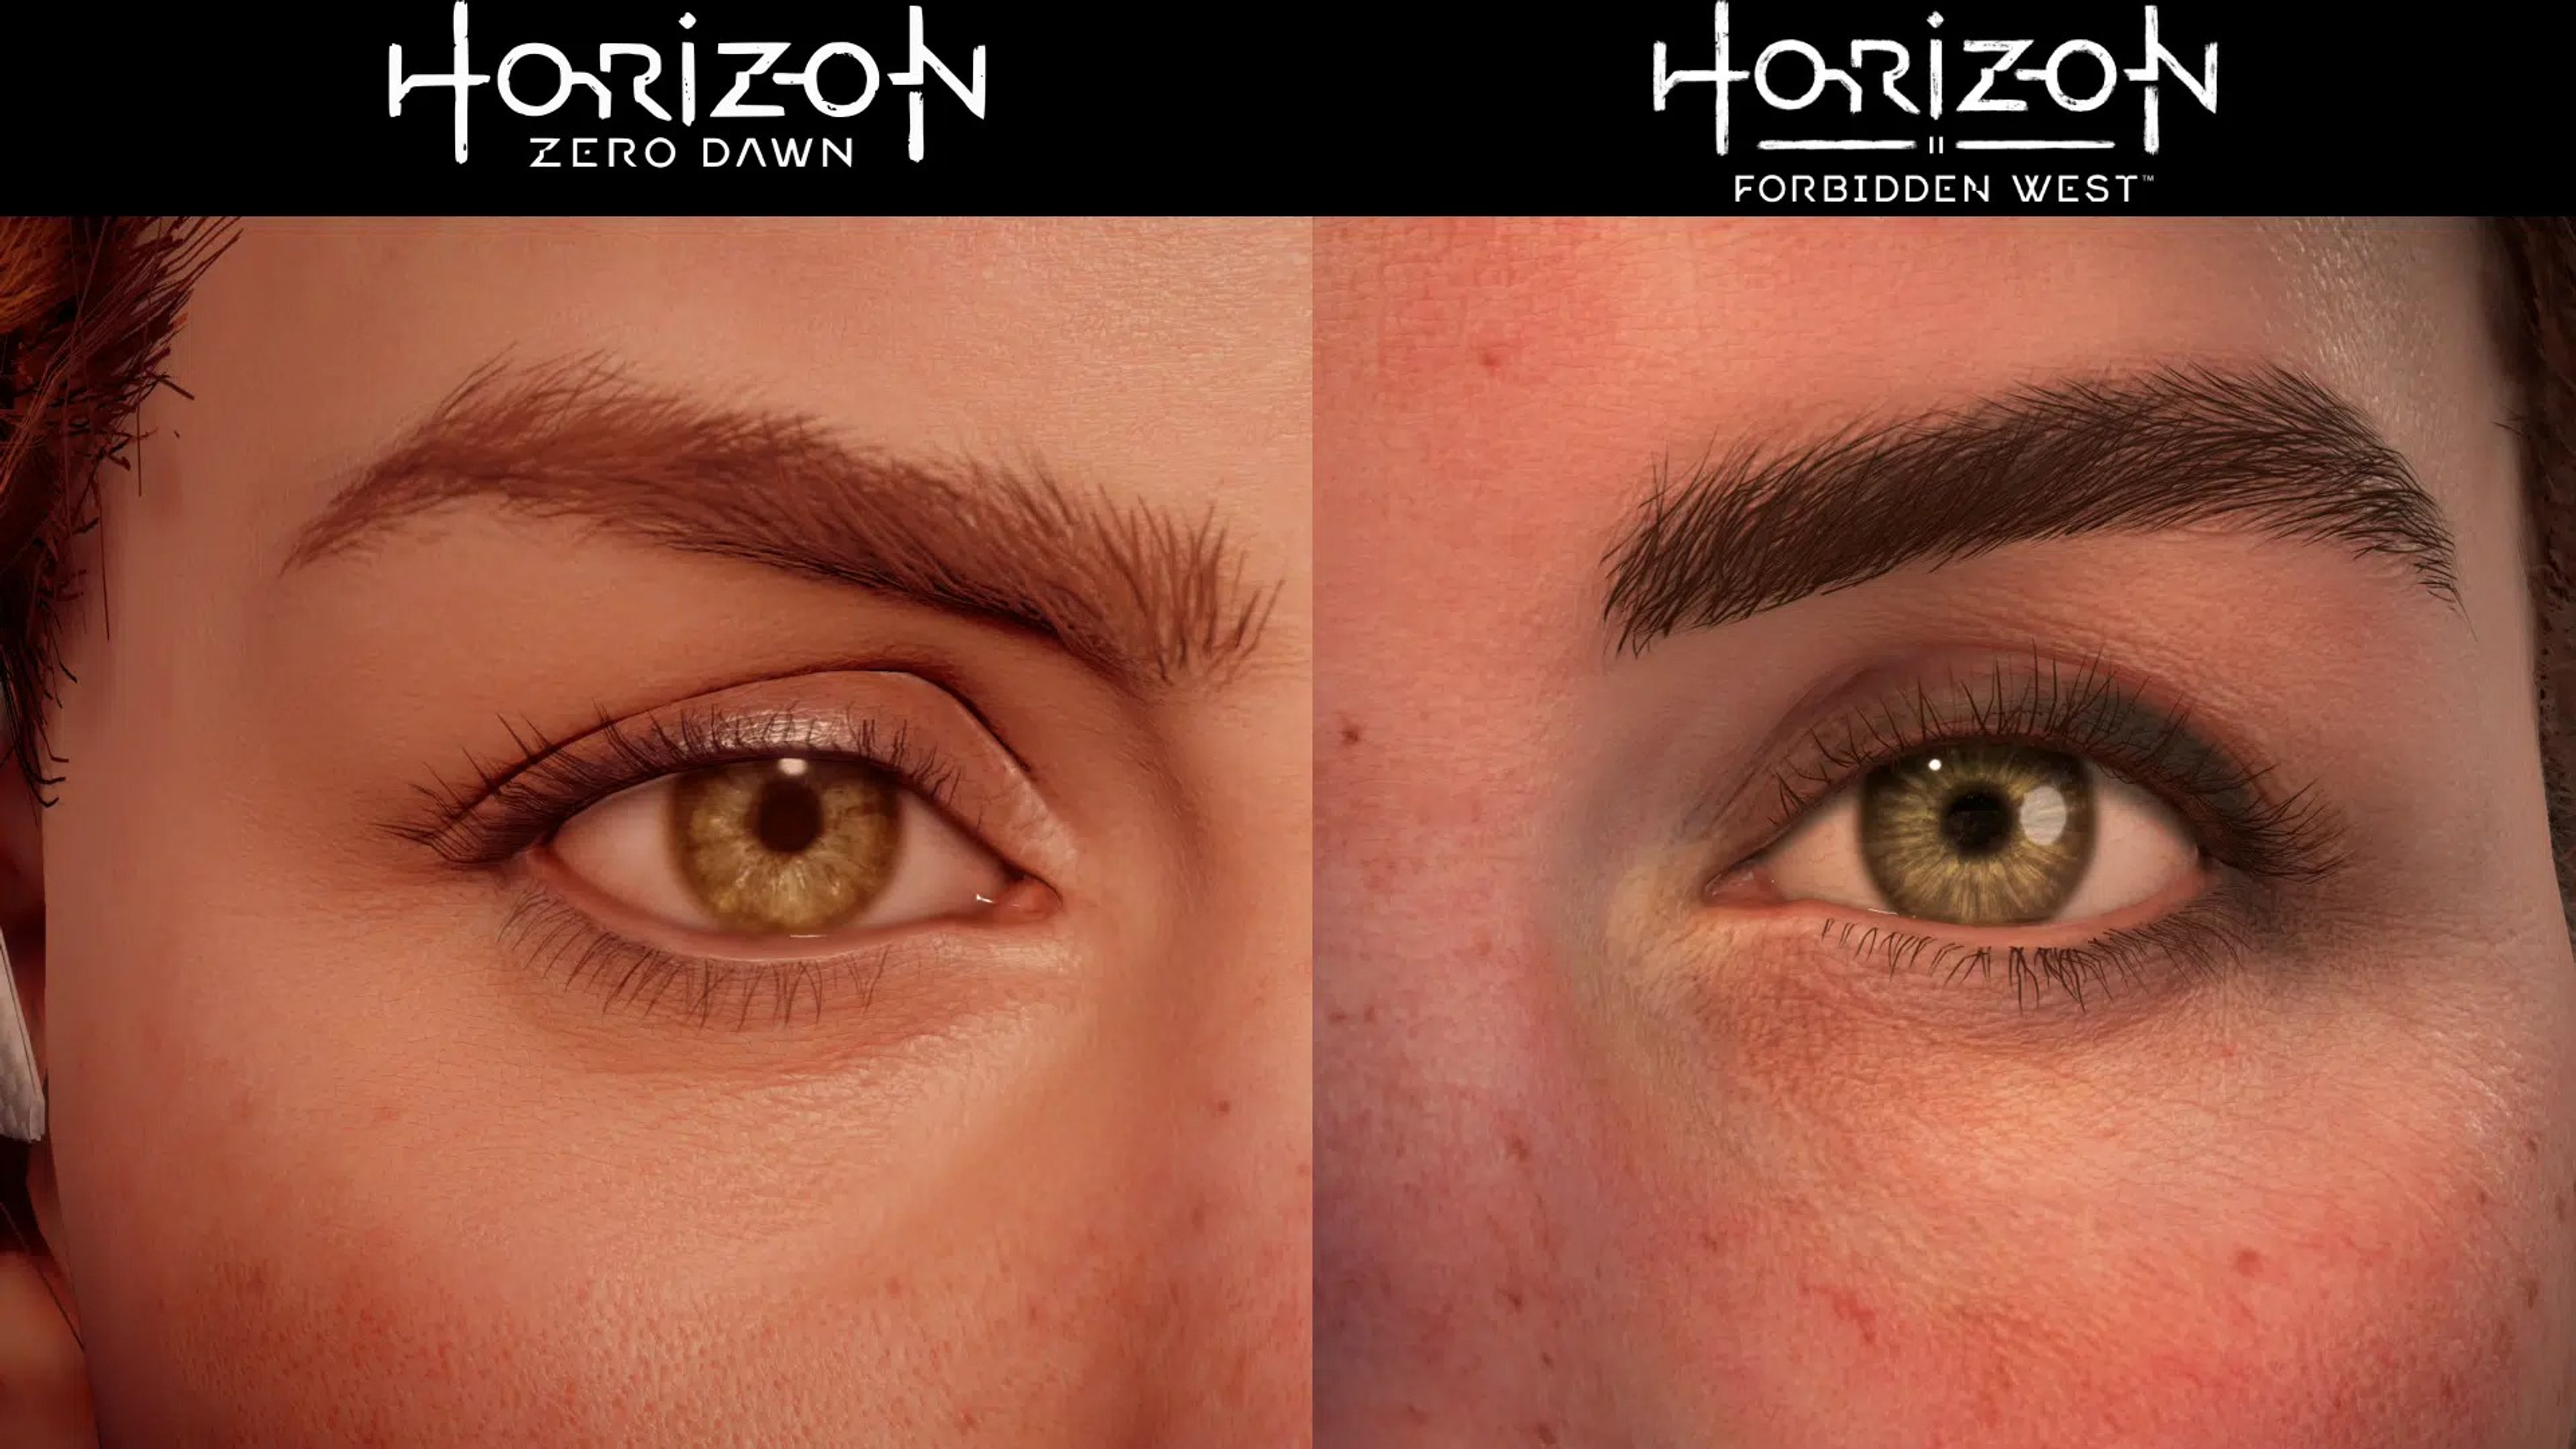 horizon-forbidden-west-vs-horizon-zero-dawn-comparison-2